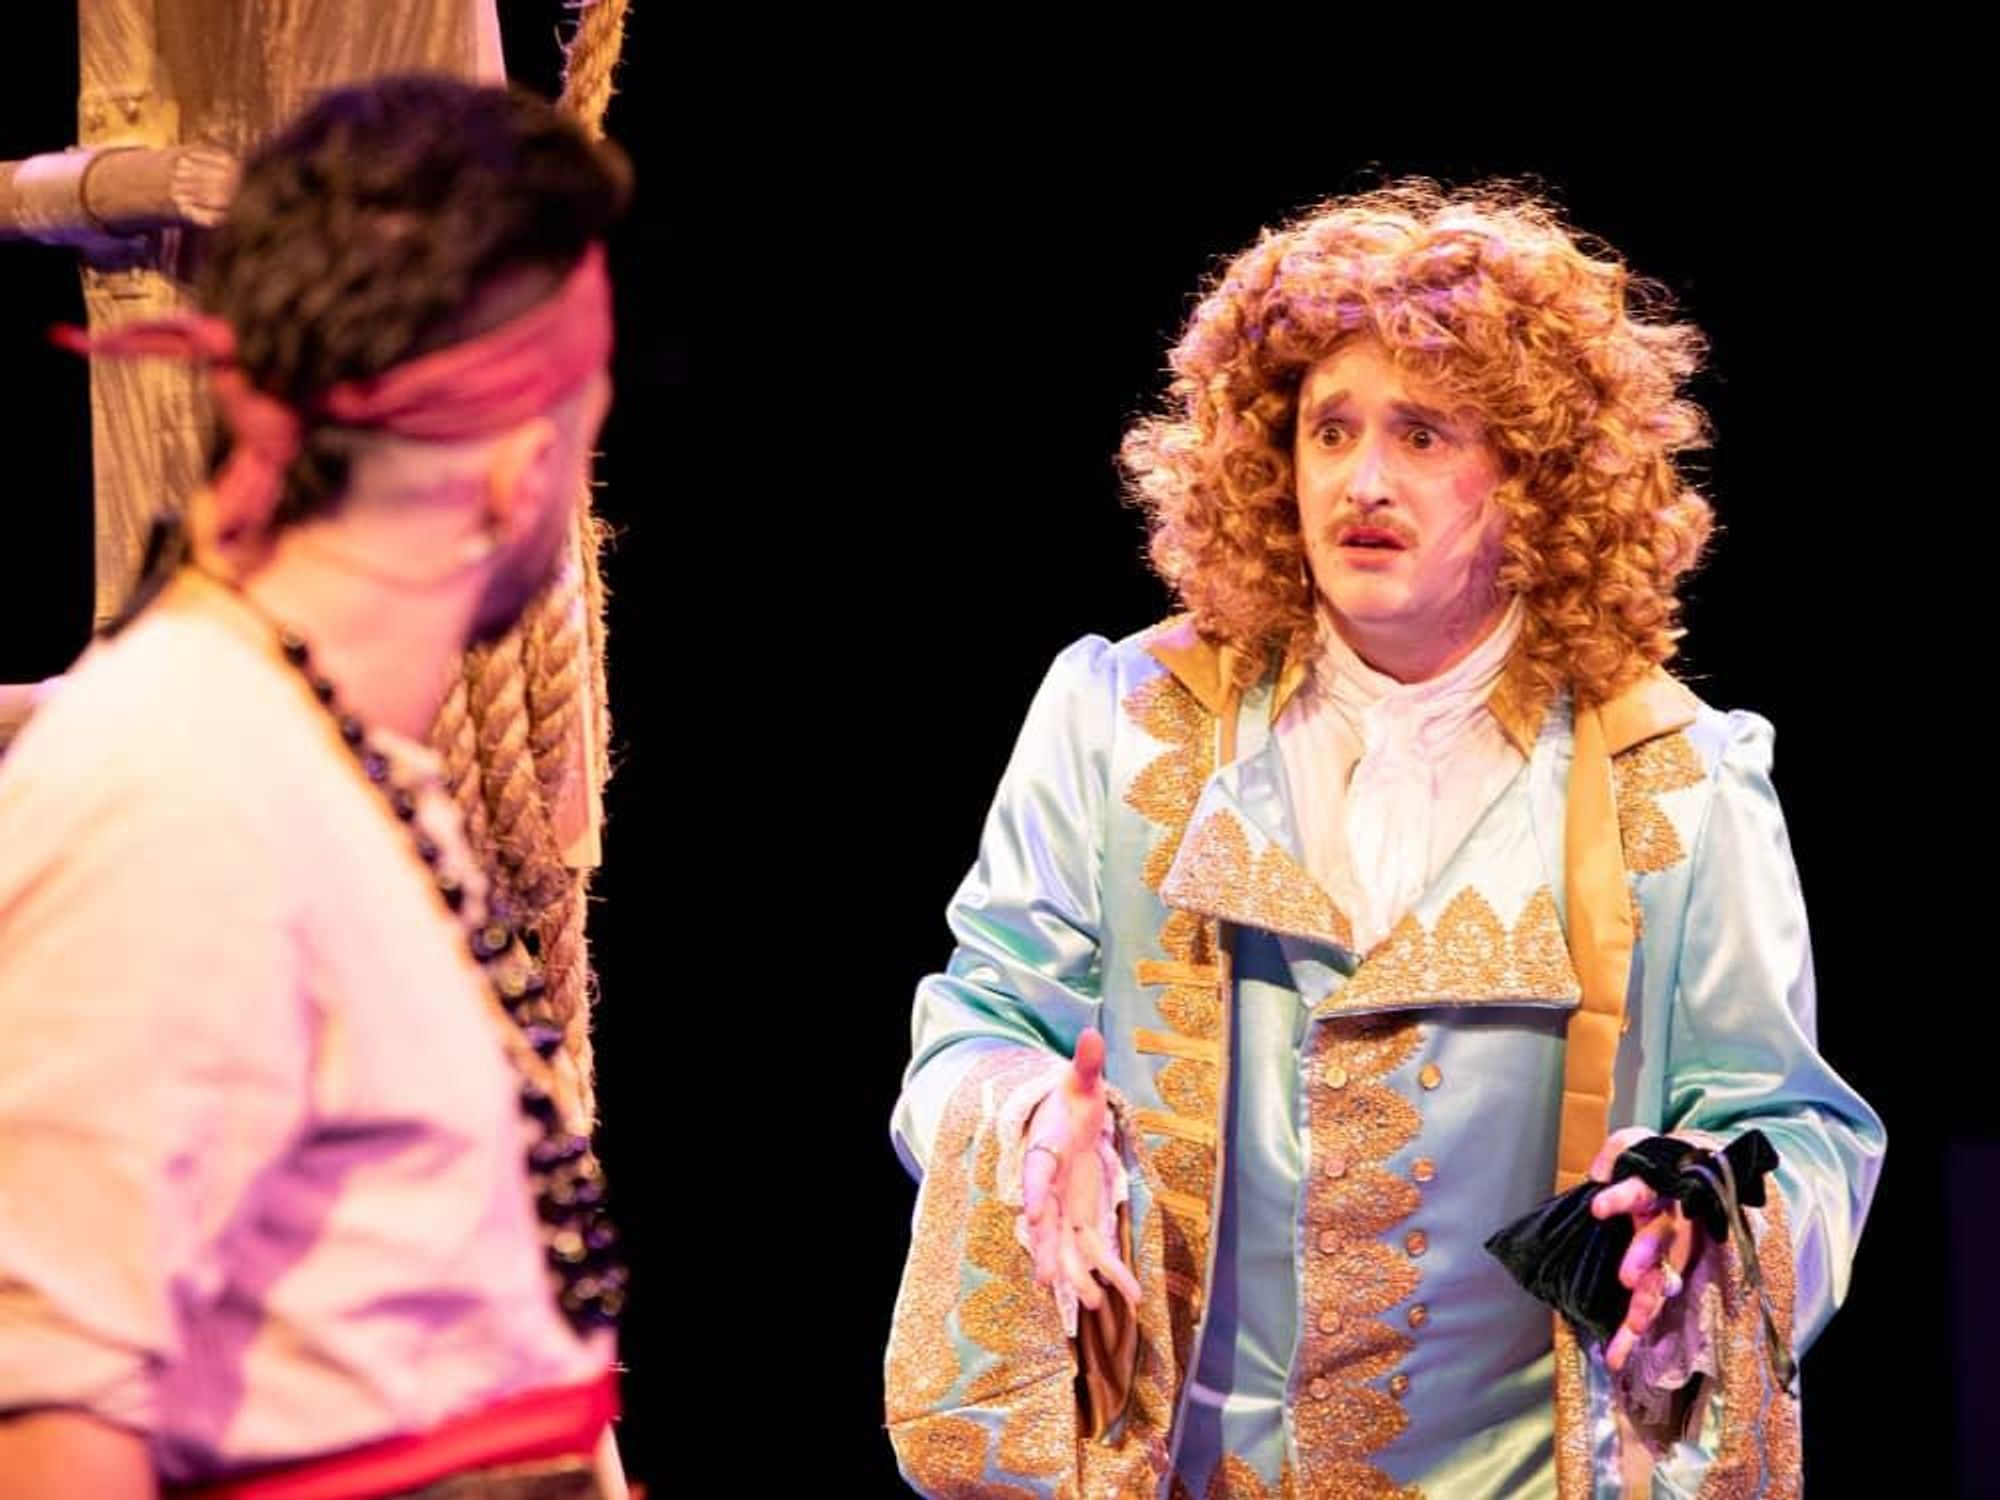 Theatre Three presents Stede Bonnet: A F*cking Pirate Musical